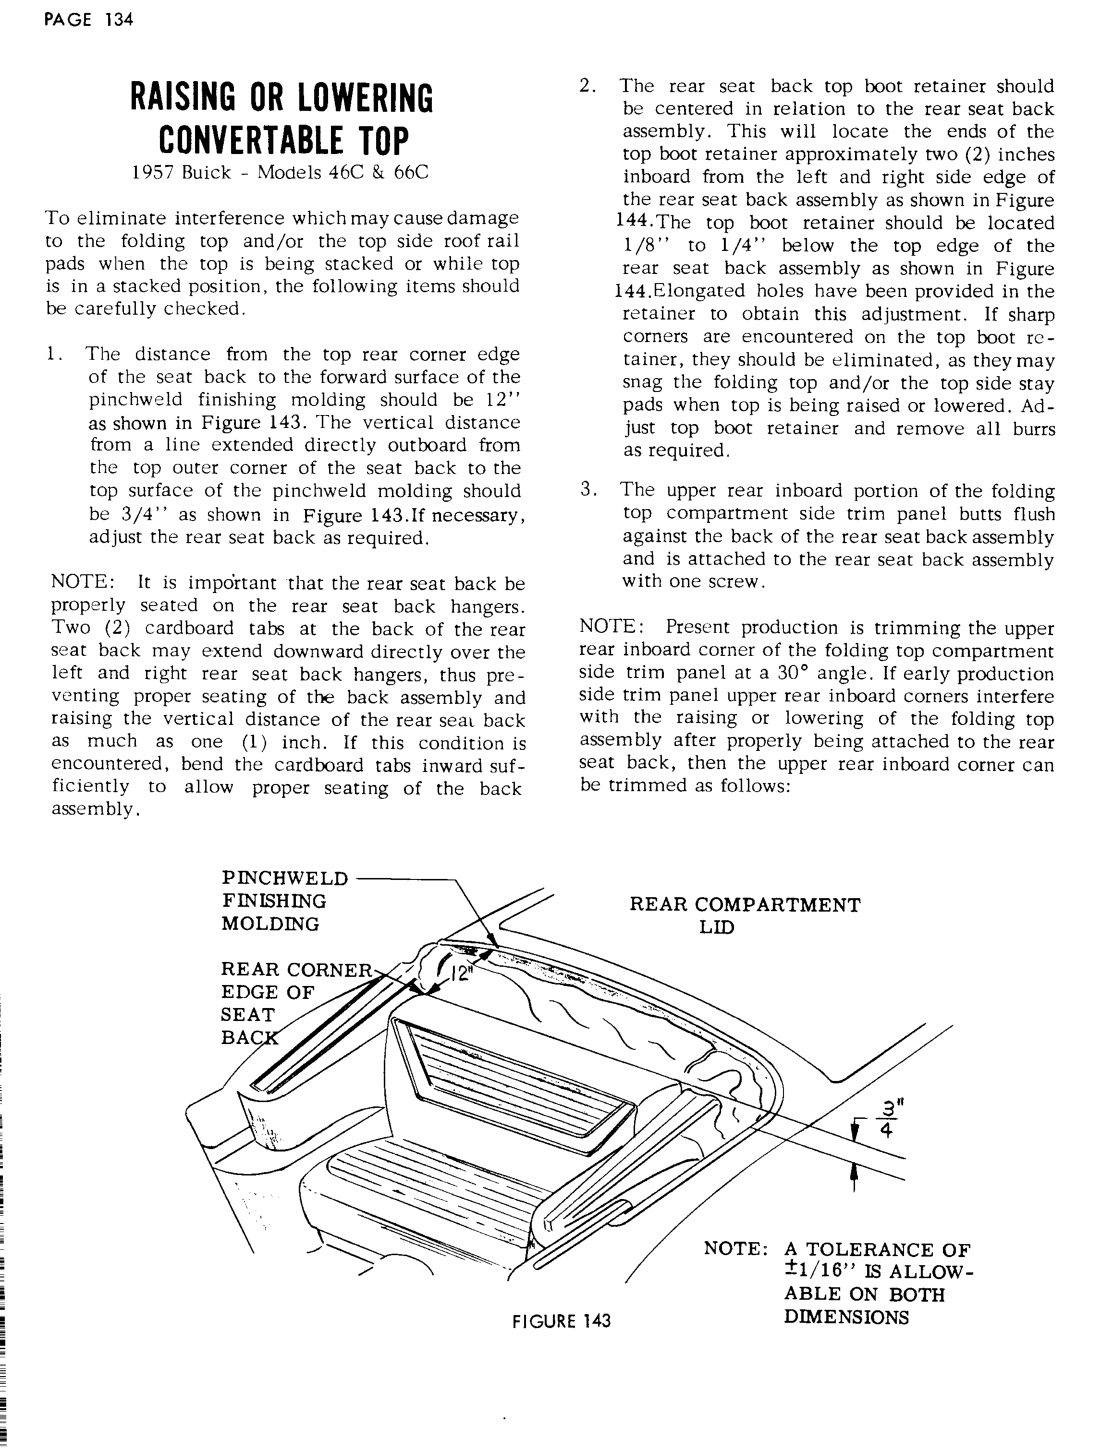 n_1957 Buick Product Service  Bulletins-135-135.jpg